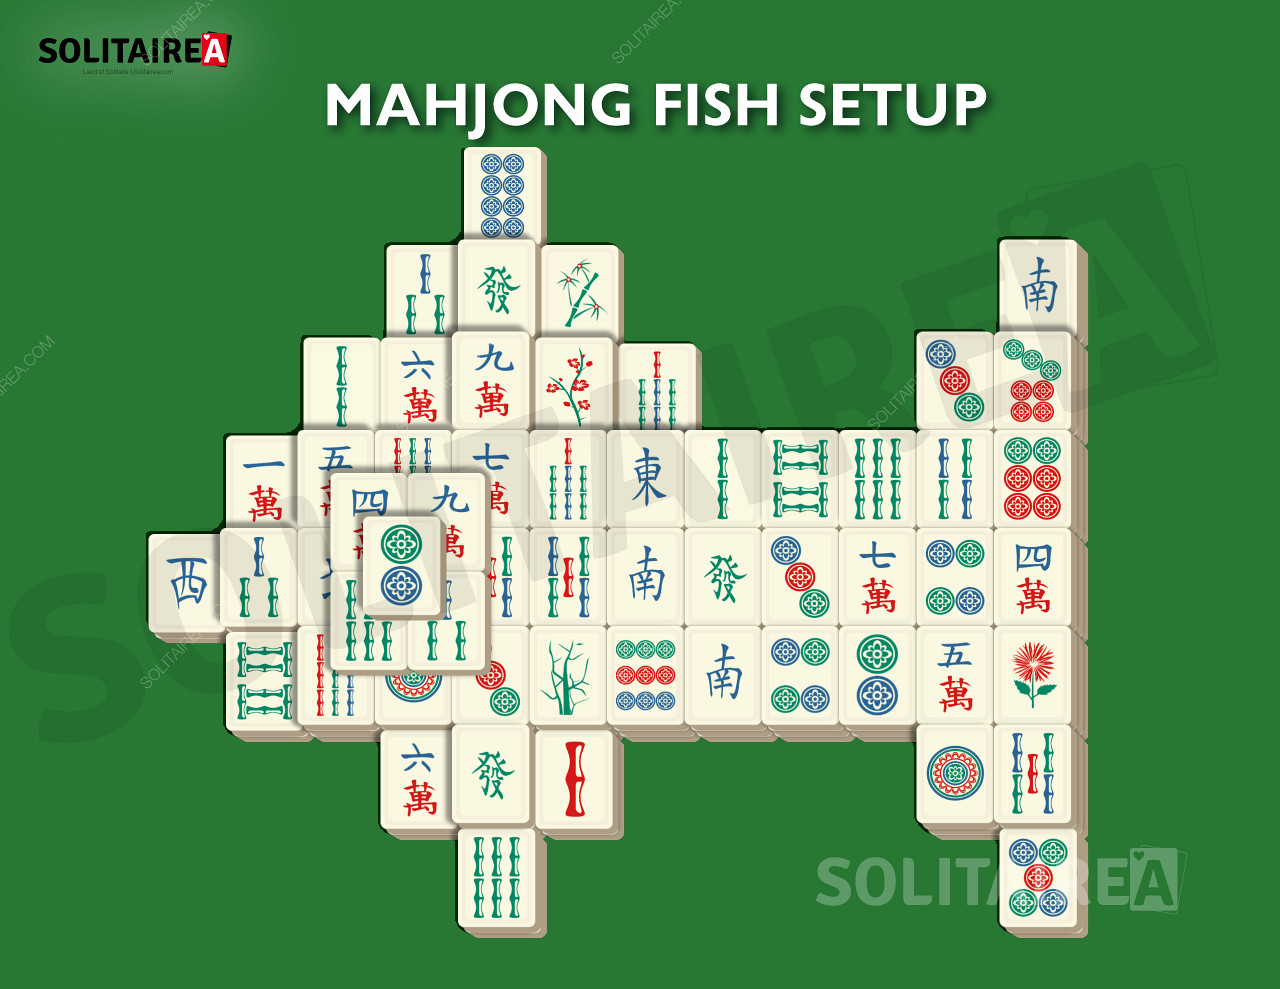 Mahjong Fish - Merenkulkuasetelma